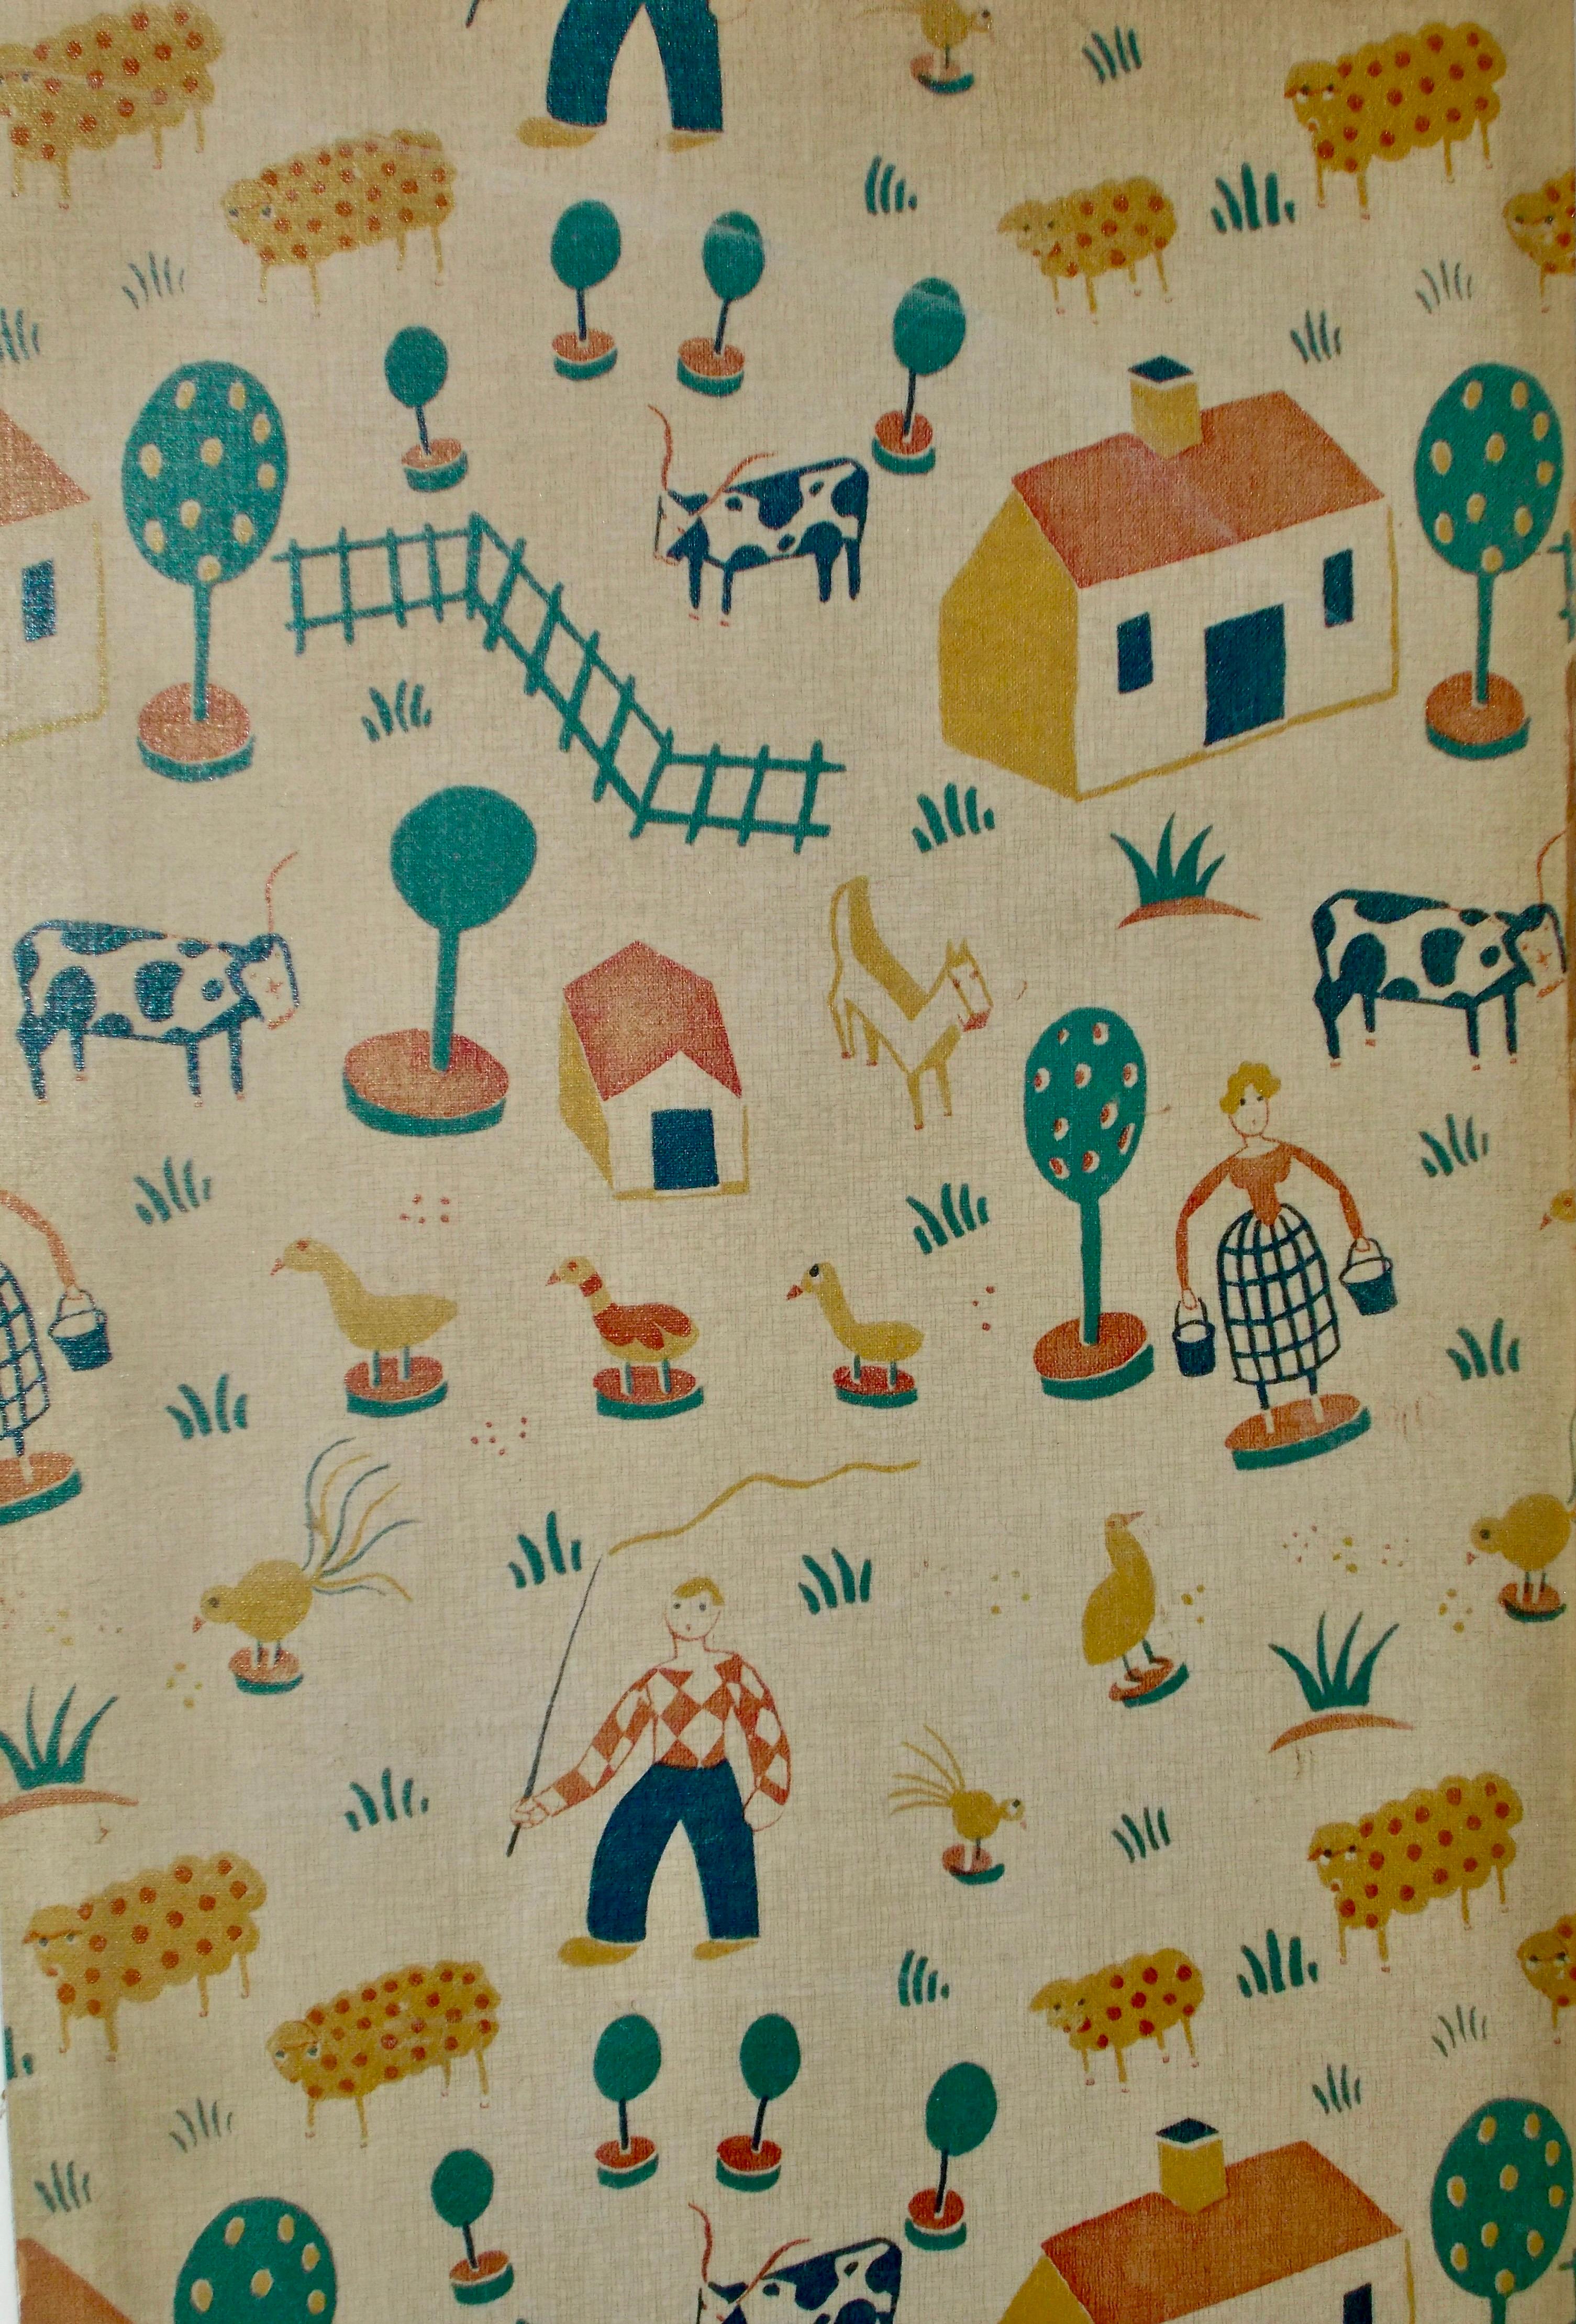 Ilonka Karasz (attributed) Nursery Wallpaper Screen In Good Condition For Sale In Sharon, CT